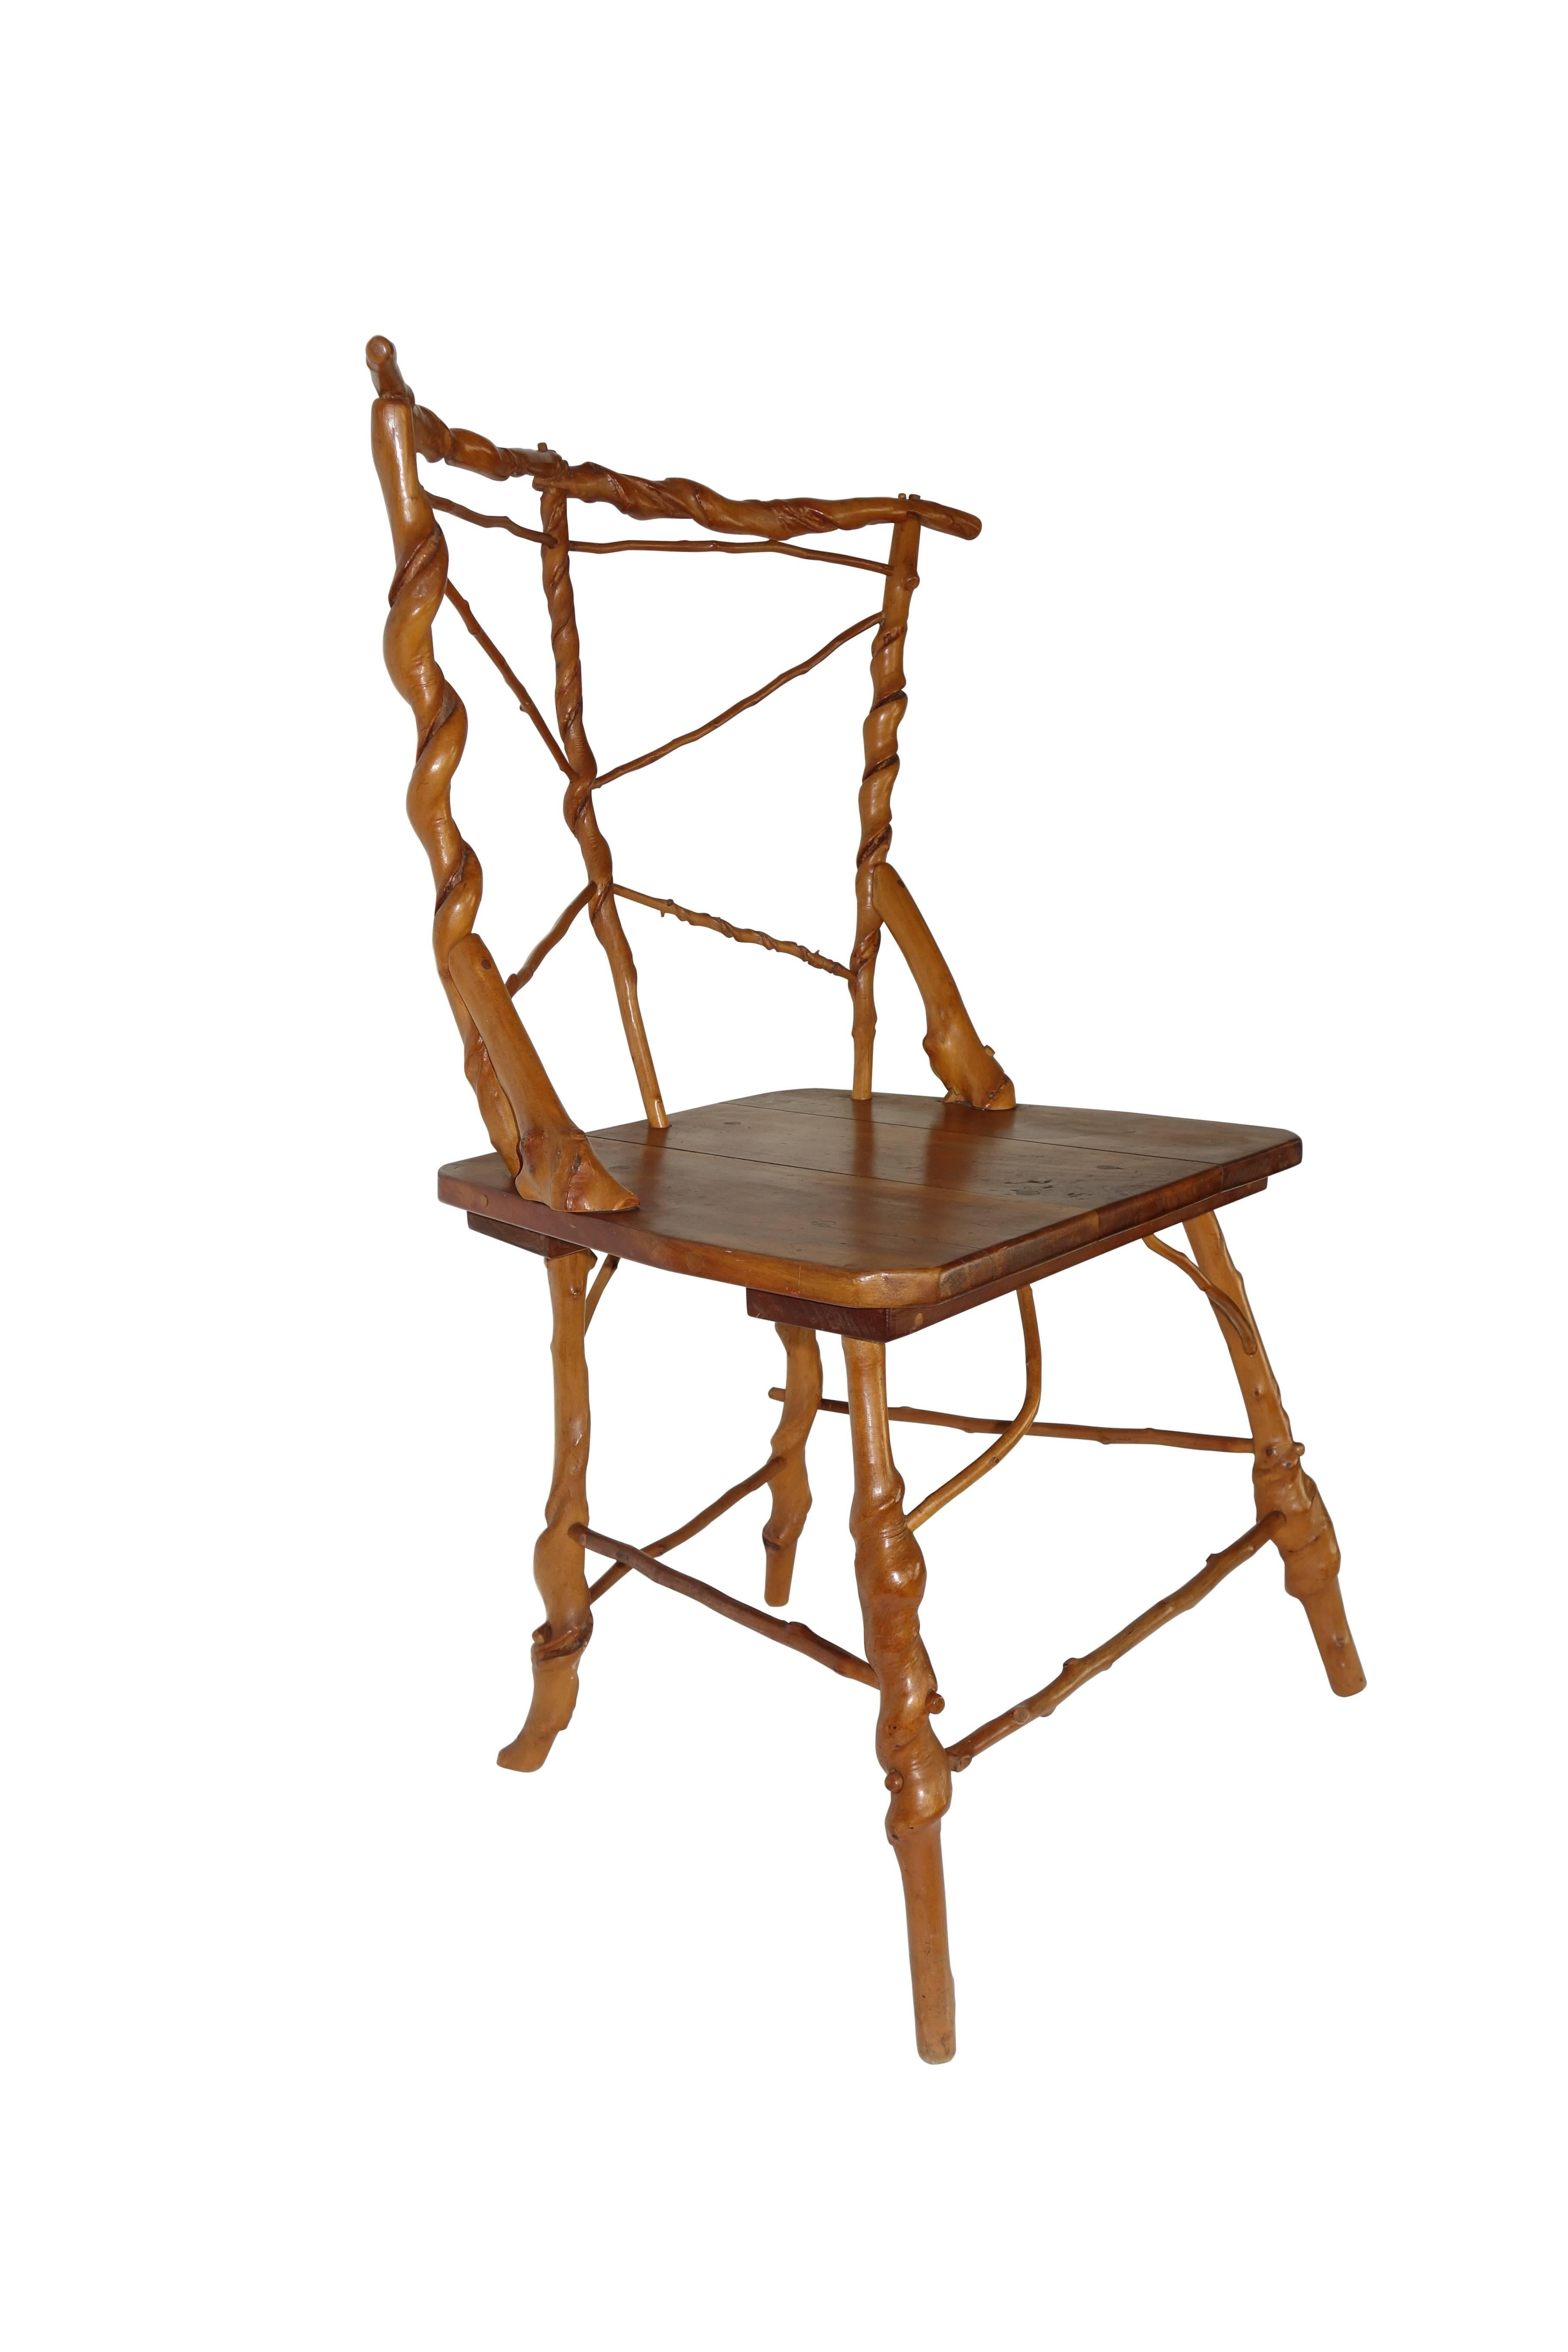 Folk Art Studio Craft Chair from Salamanaca, New York